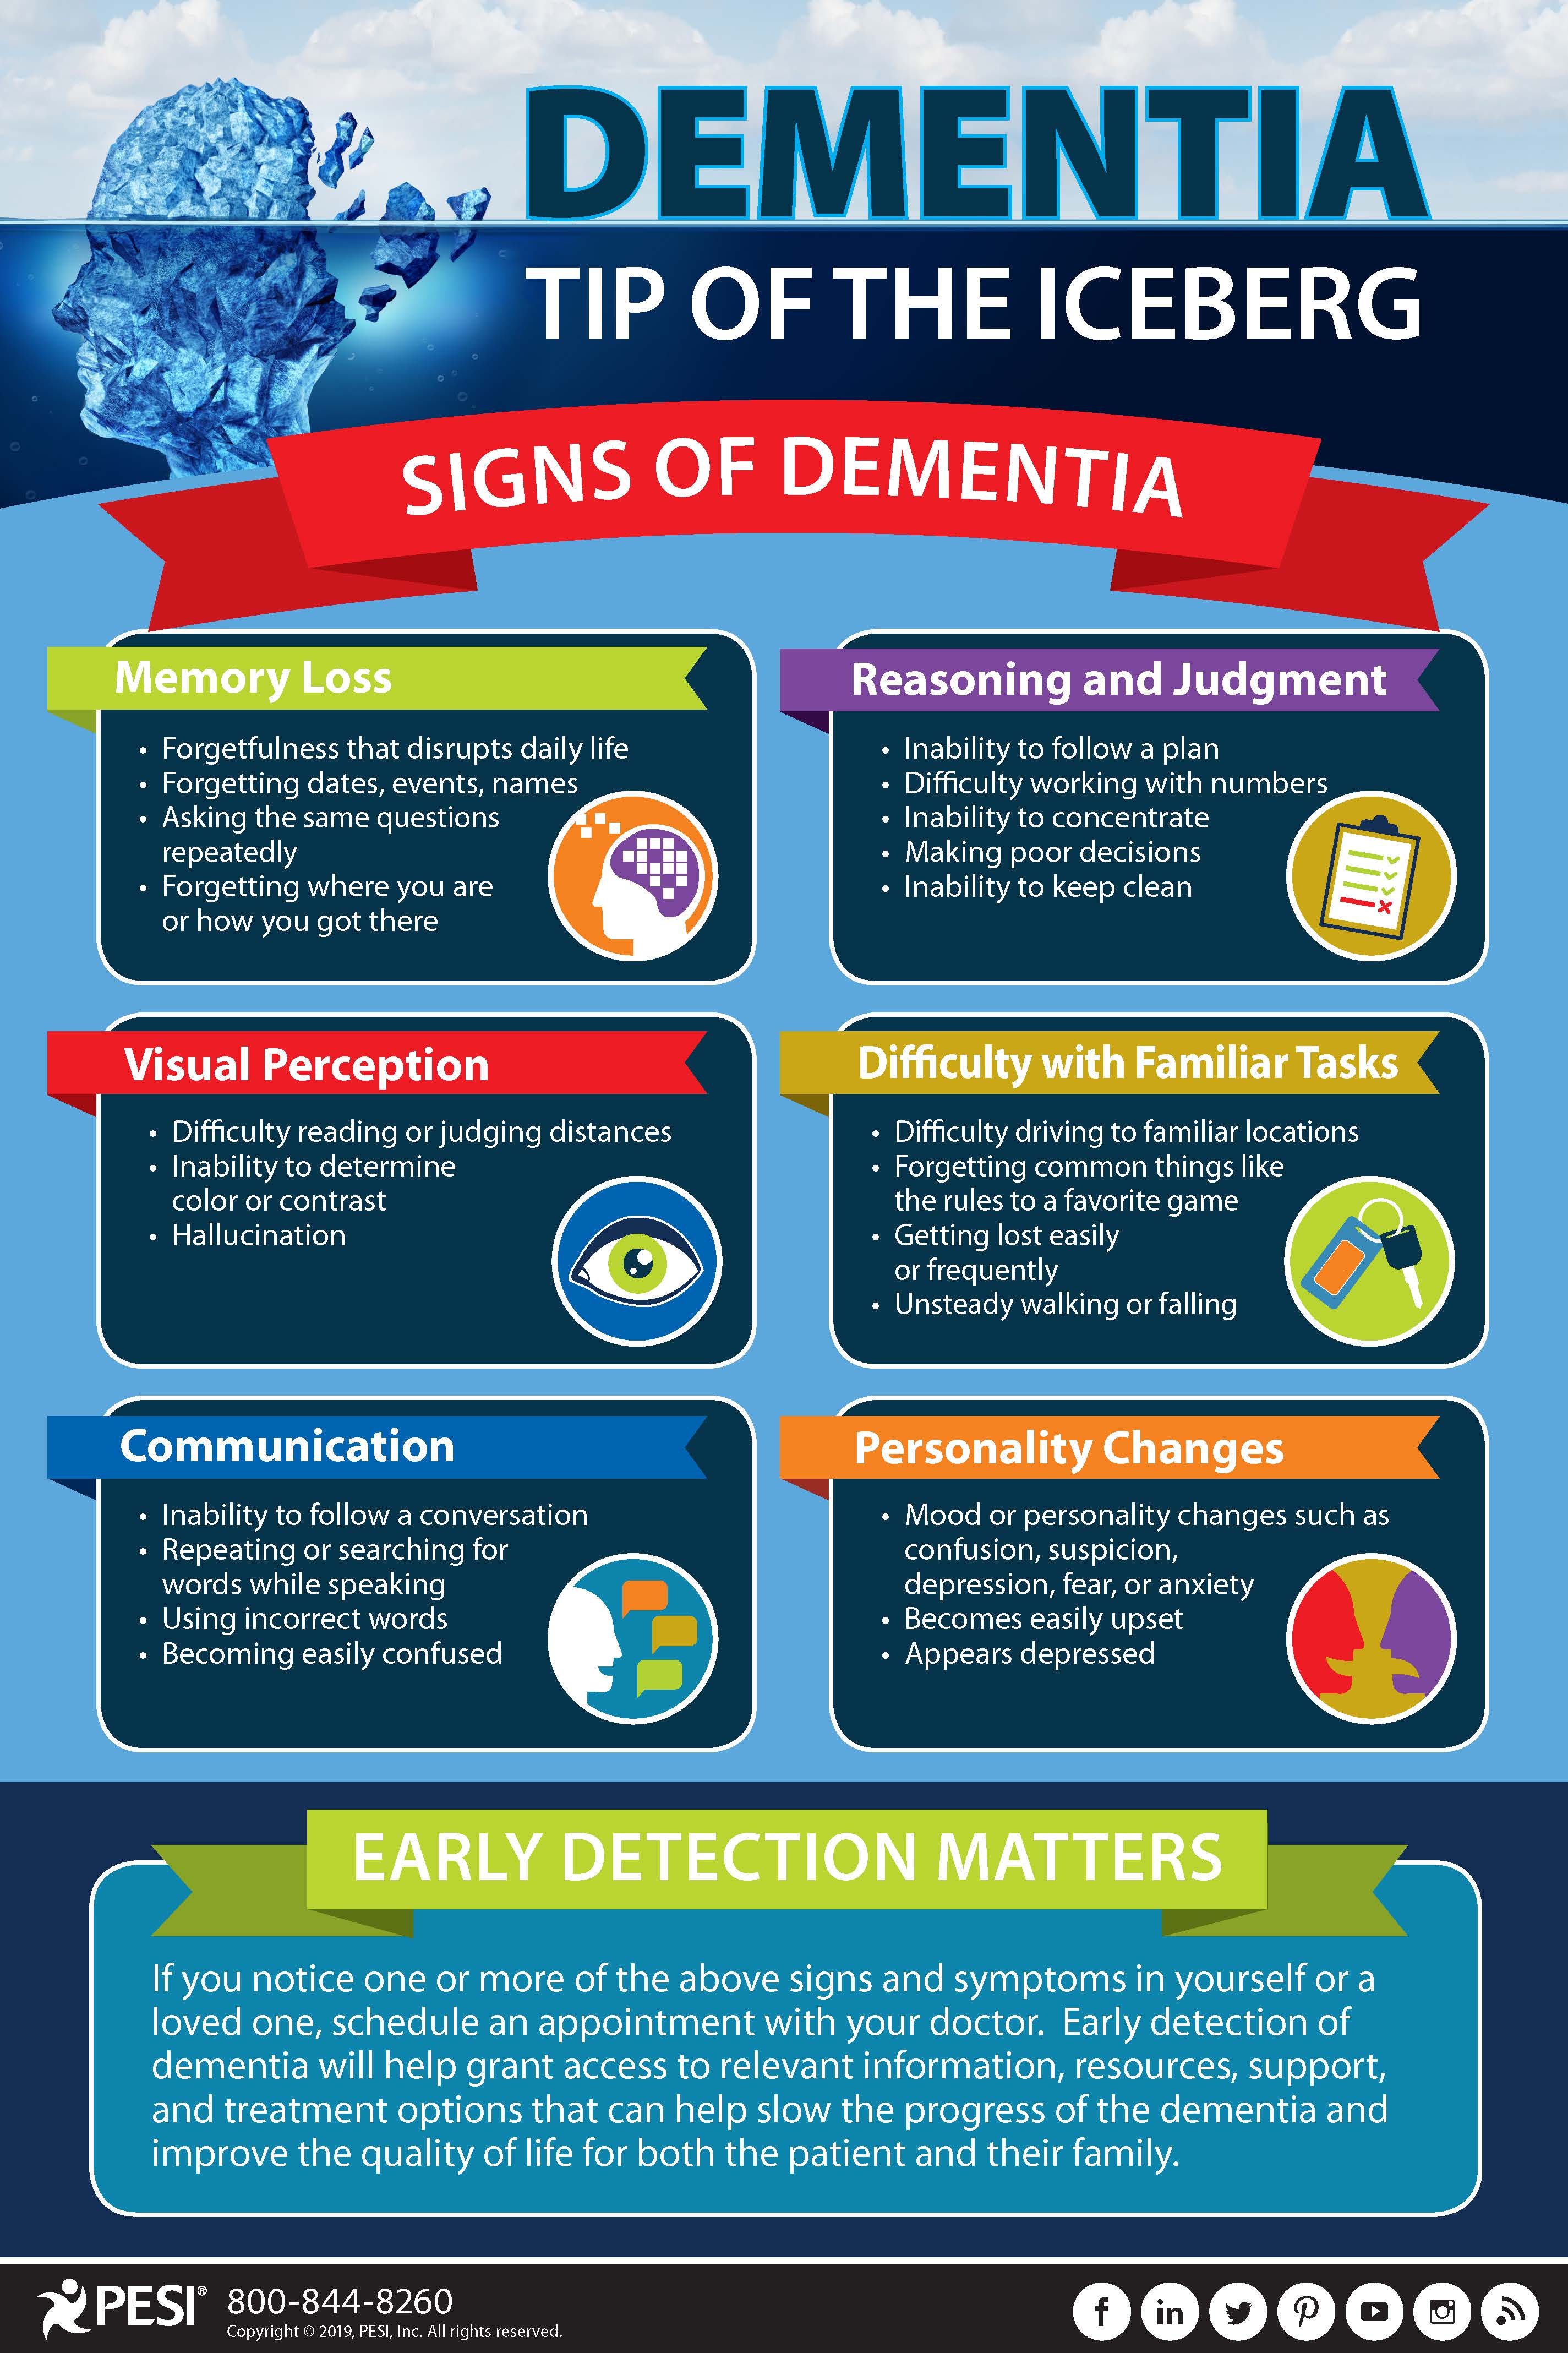 Dementia: Tip of the Iceberg infographic